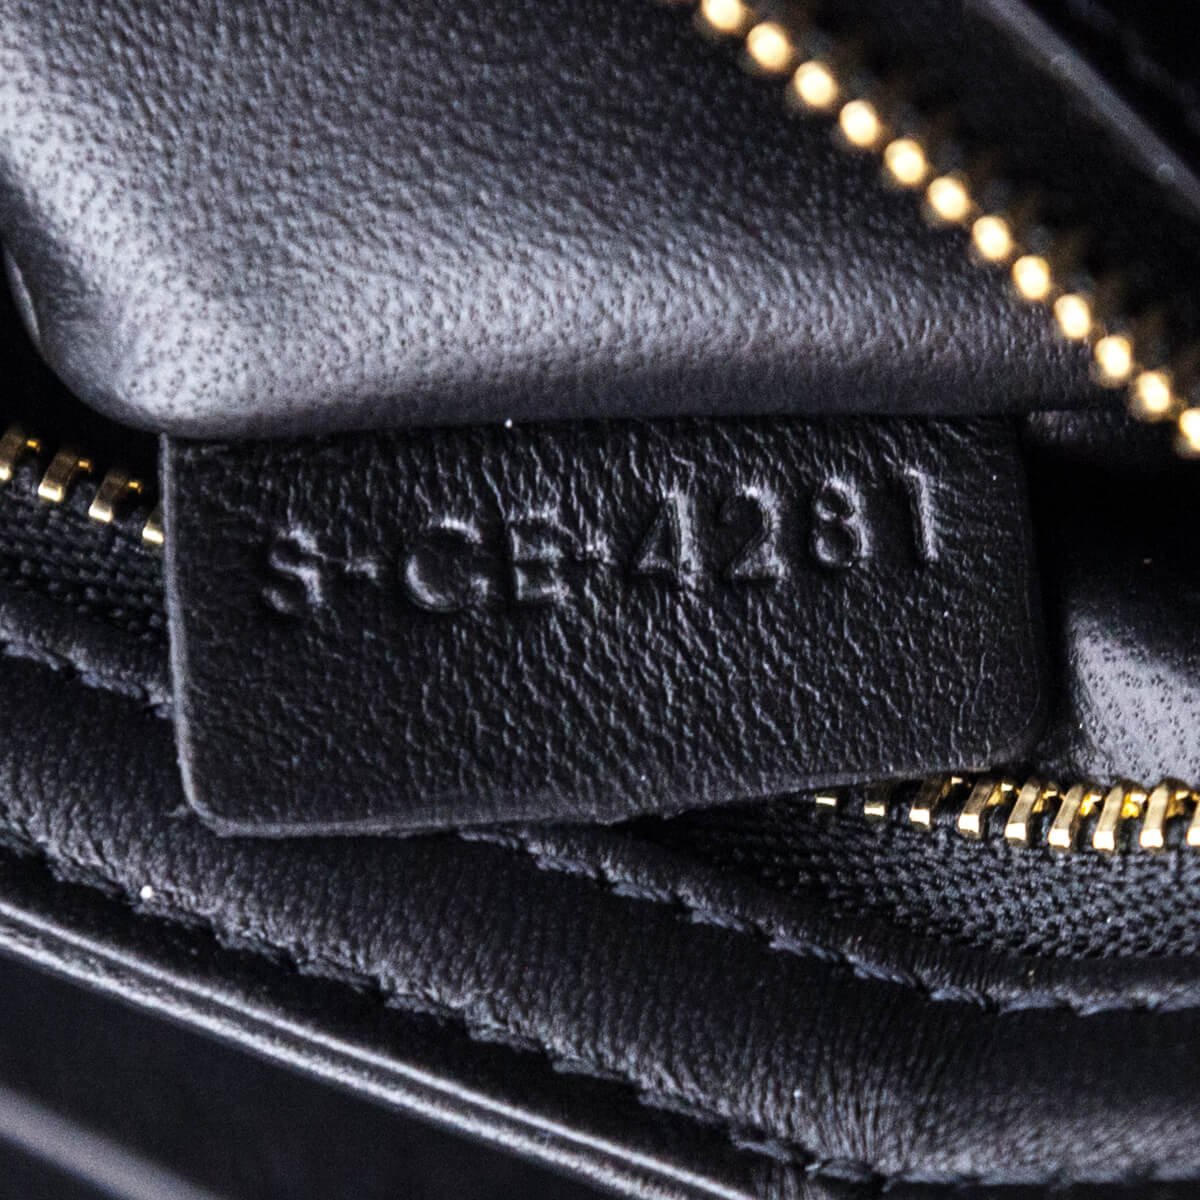 Celine Black Shiny Calfskin Medium Triomphe Bag - Love that Bag etc - Preowned Authentic Designer Handbags & Preloved Fashions